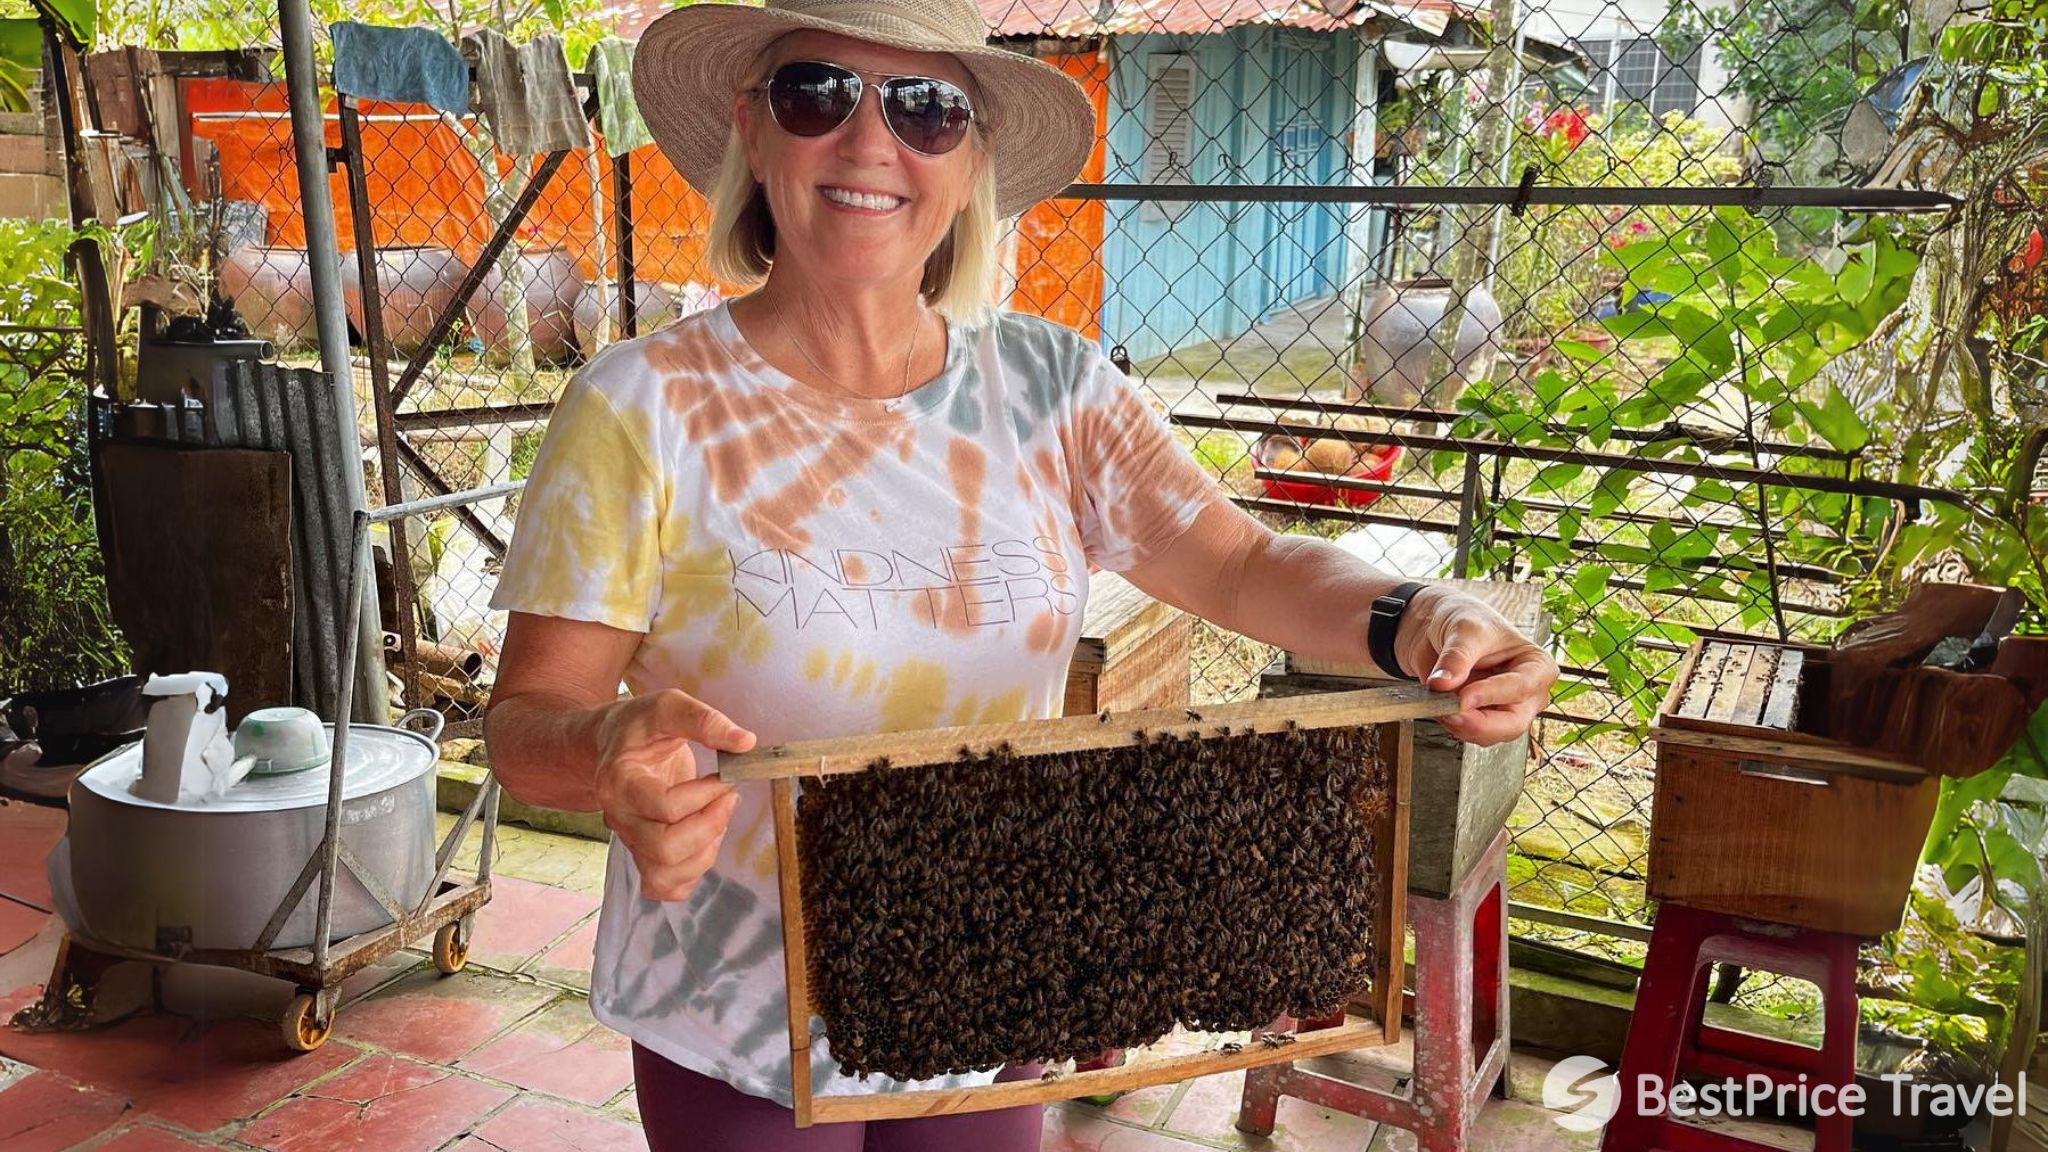 Day 2 Explore The Bee World In A Local Farm